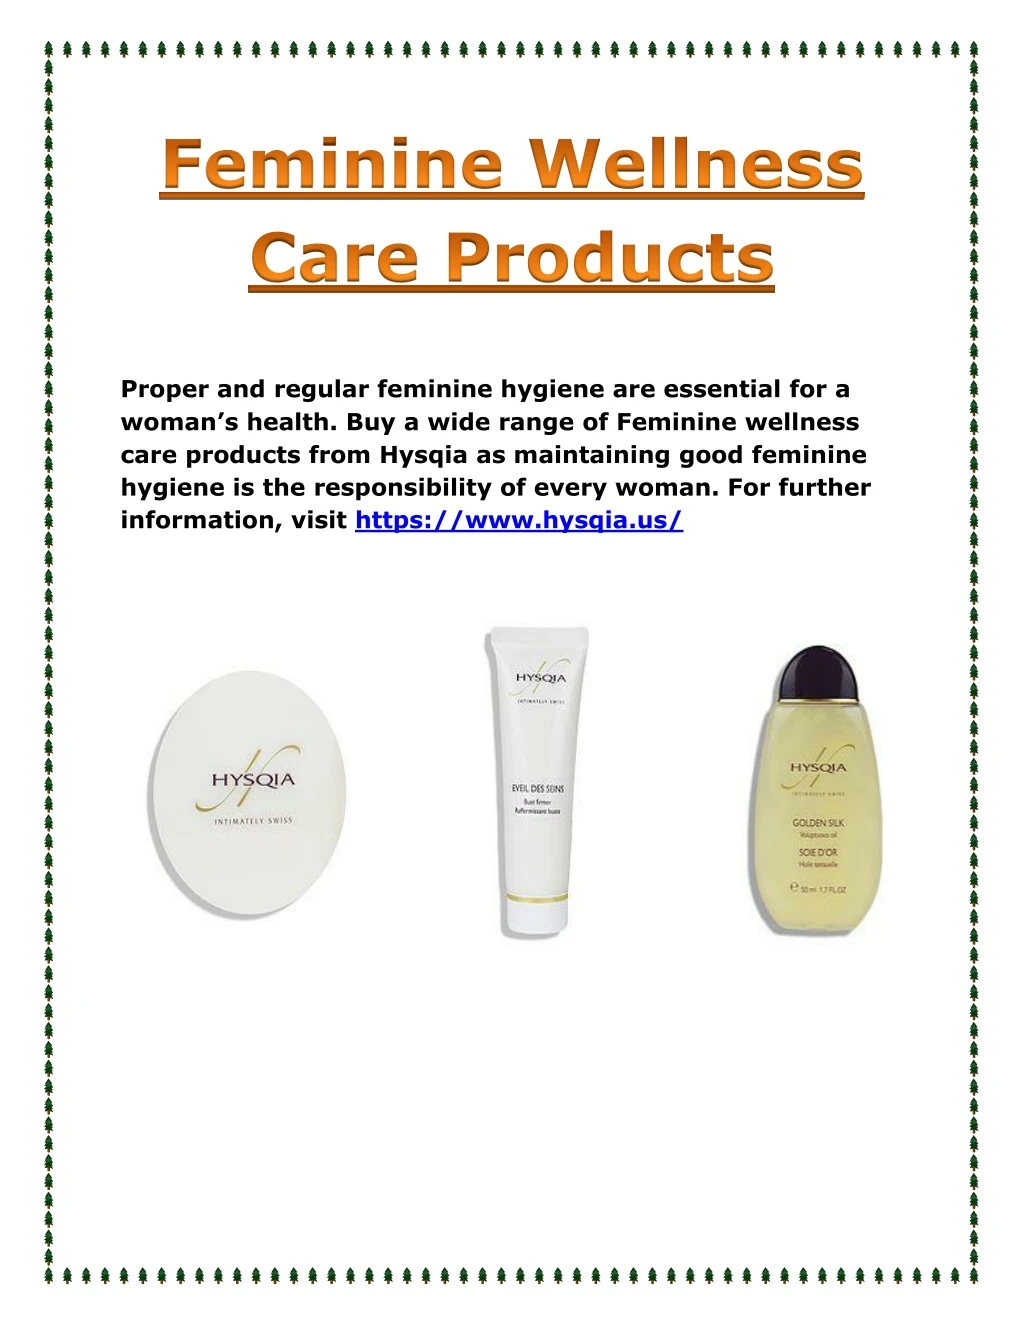 proper and regular feminine hygiene are essential